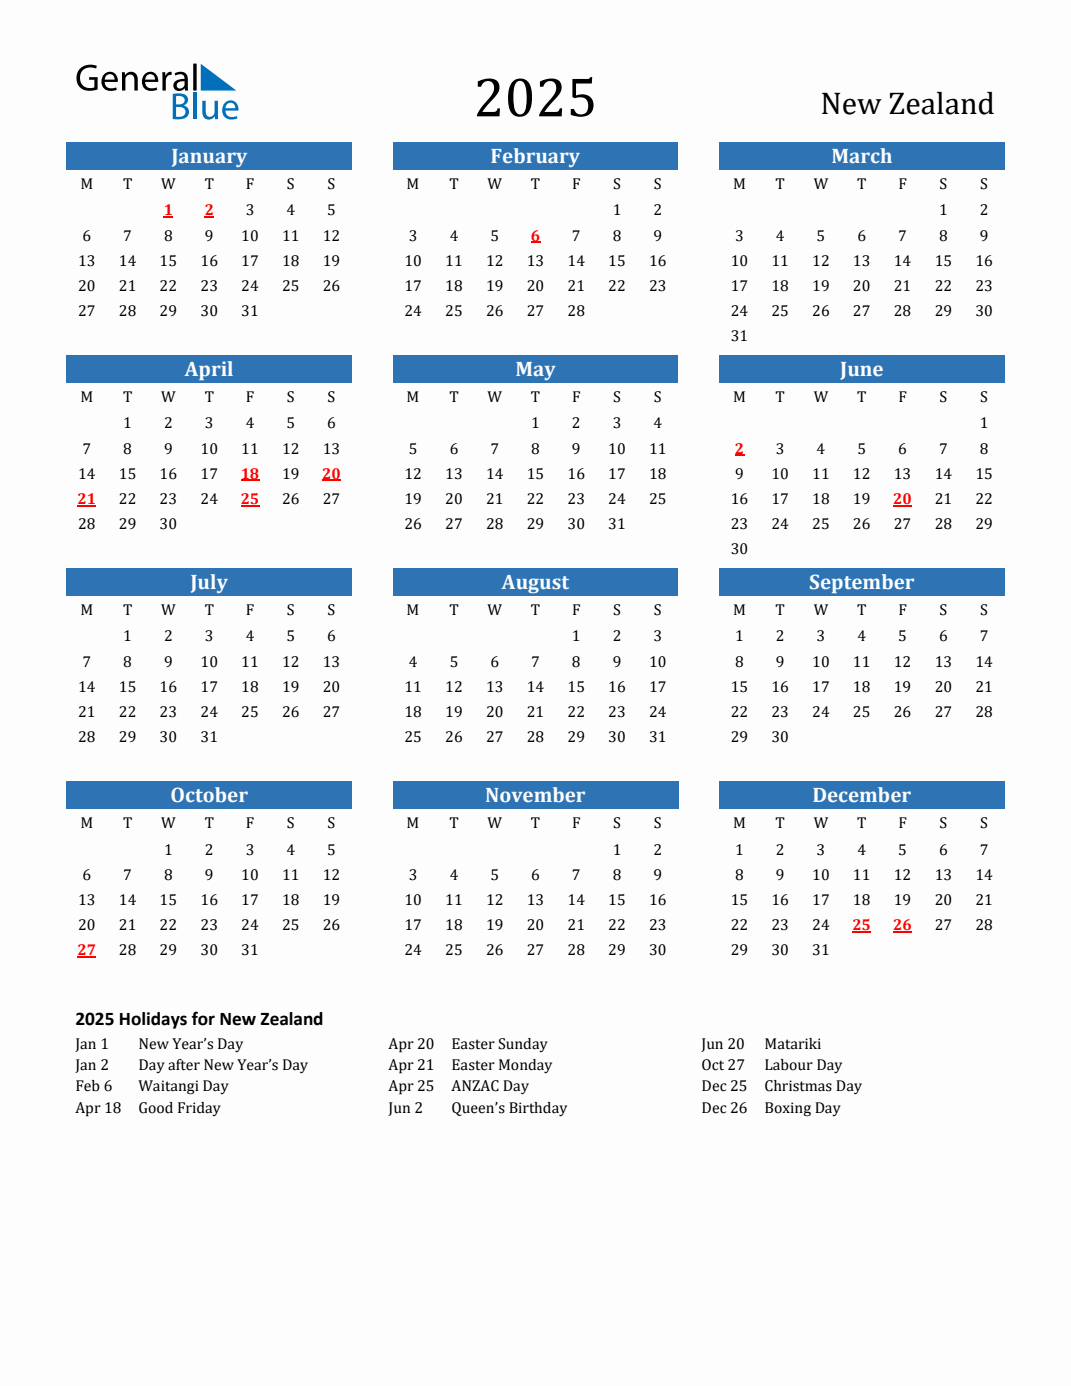 2025 Holiday Calendar for New Zealand - Monday Start